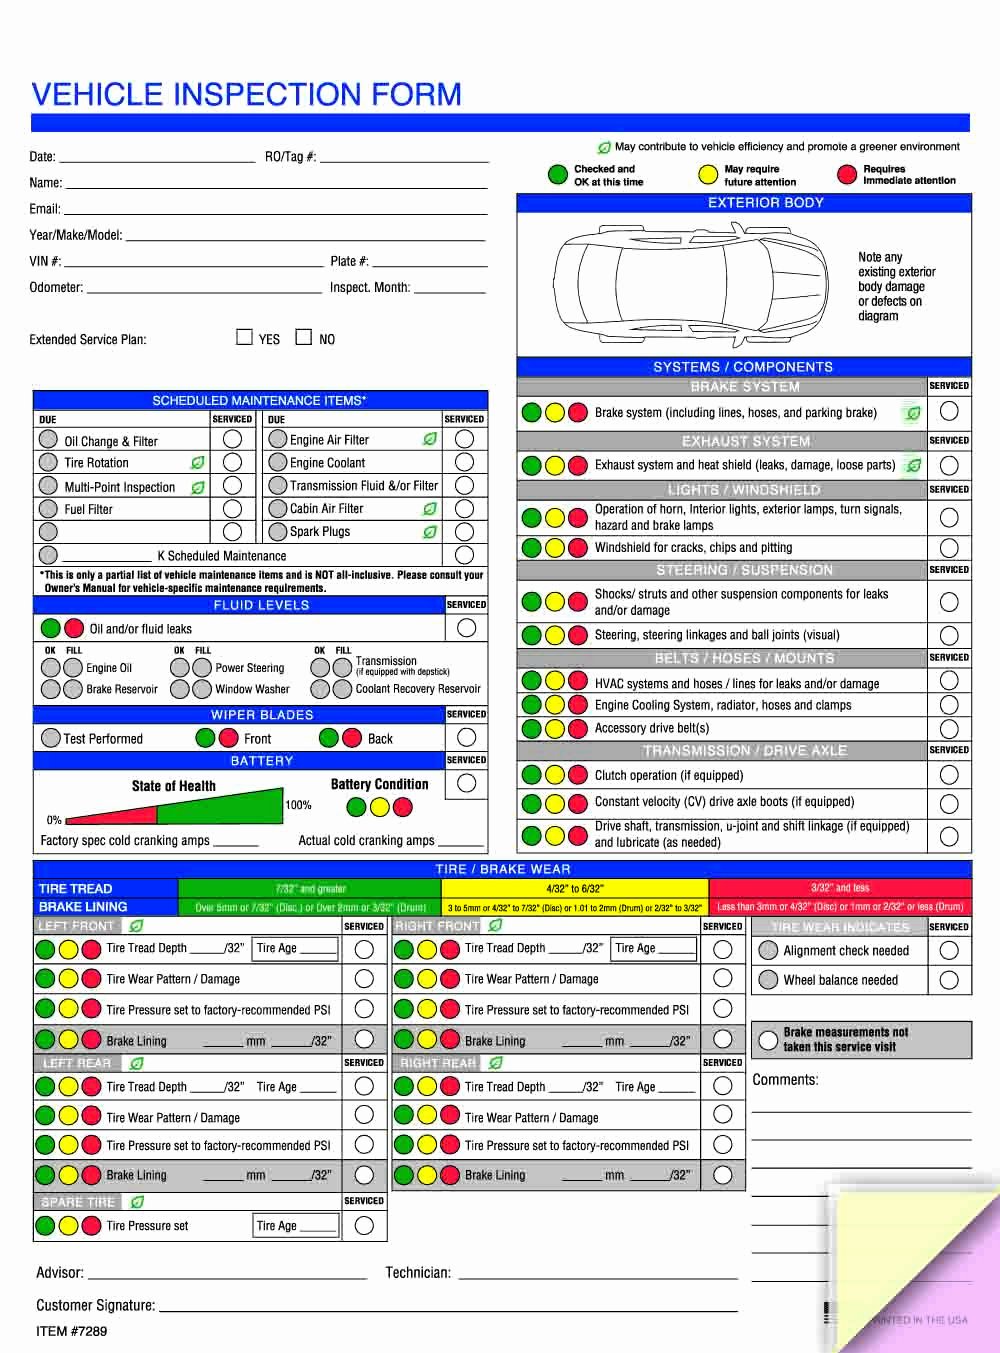 Vehicle Maintenance forms